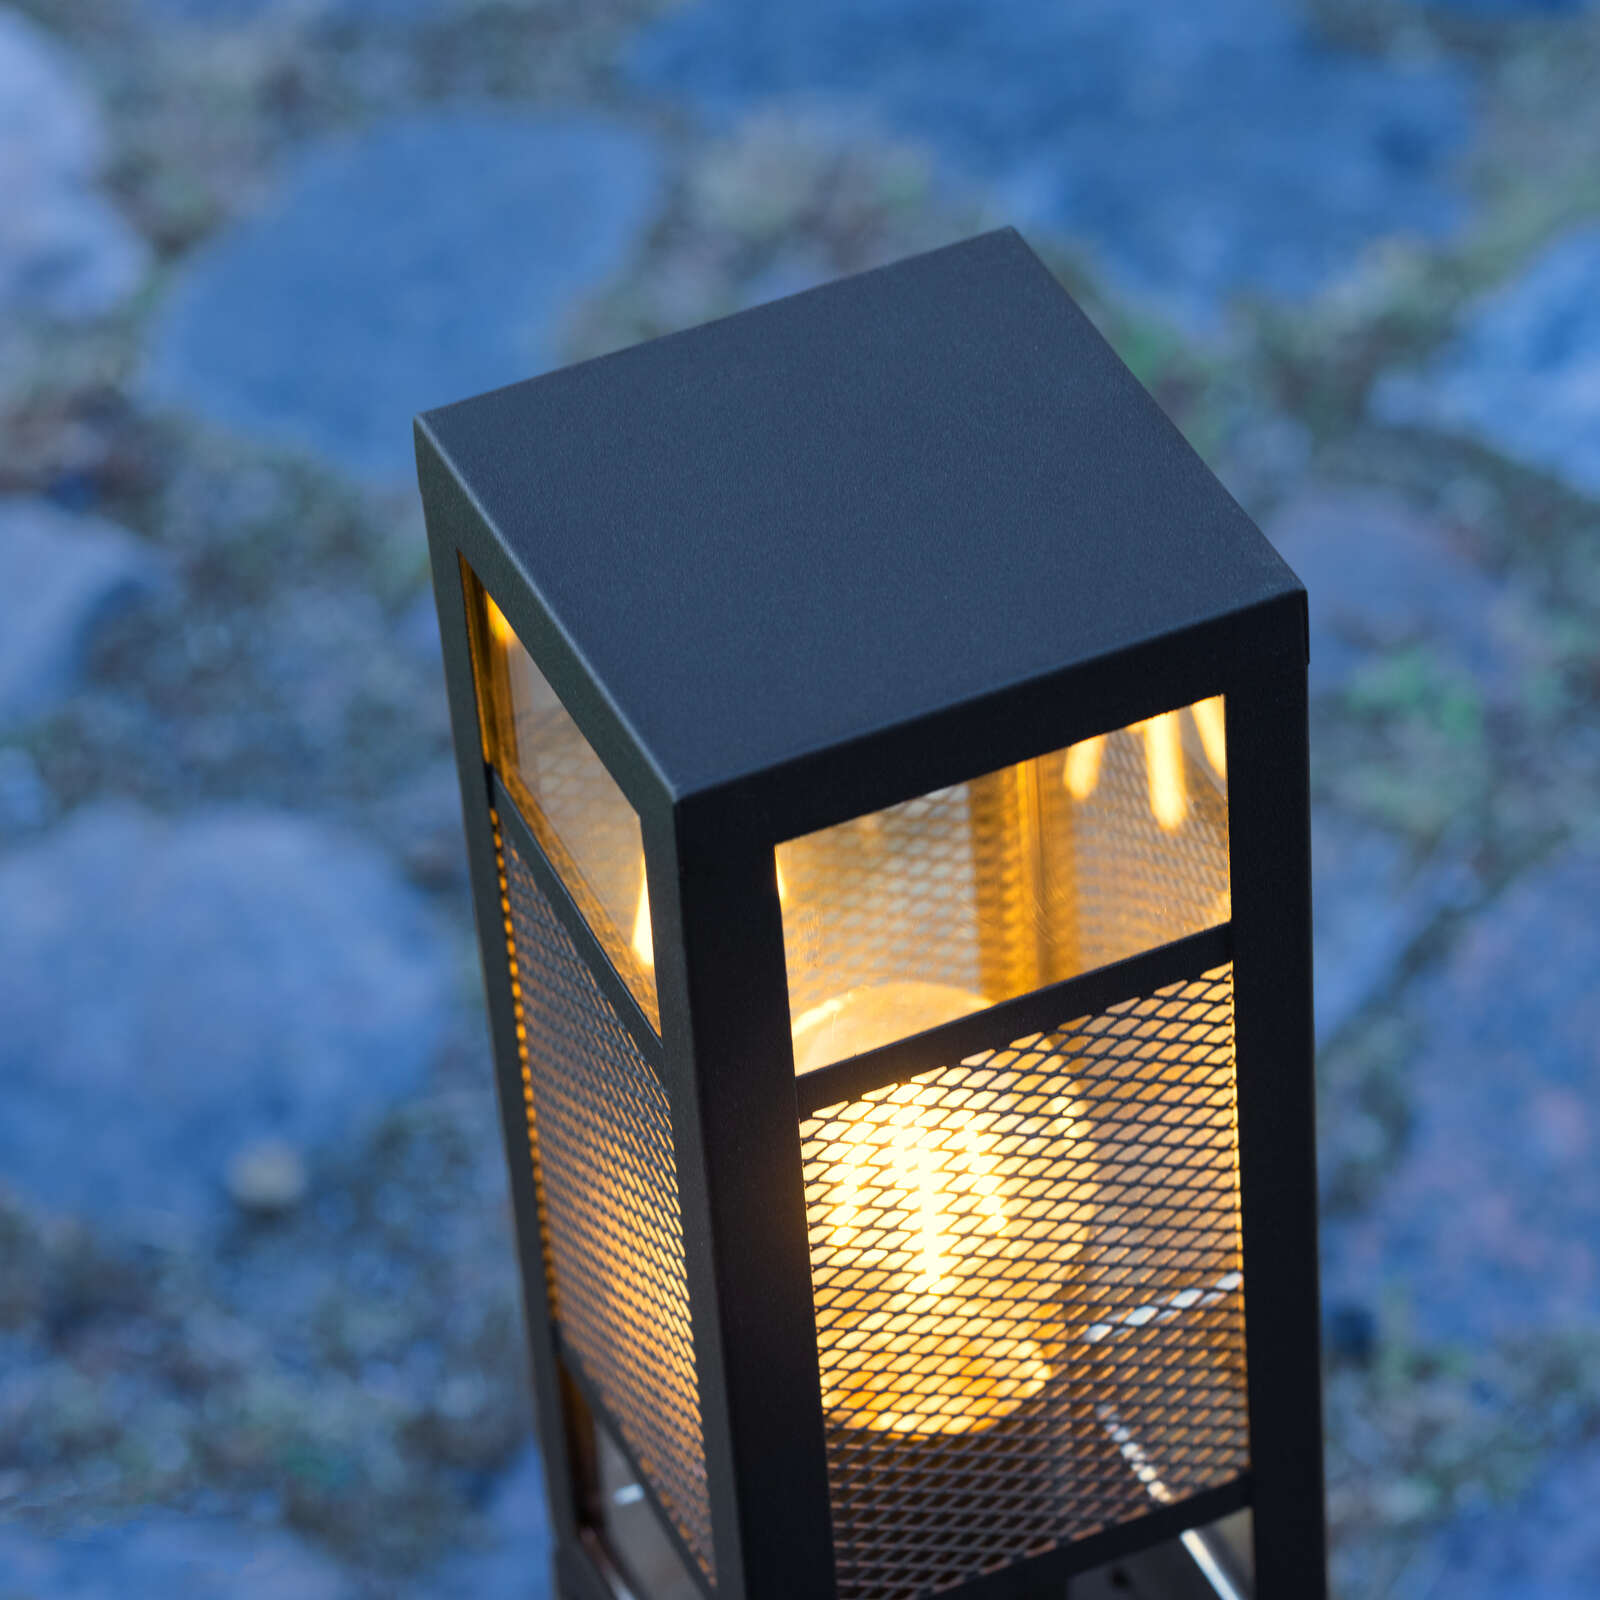             Outdoor metal plinth light - Hendrik - Black
        